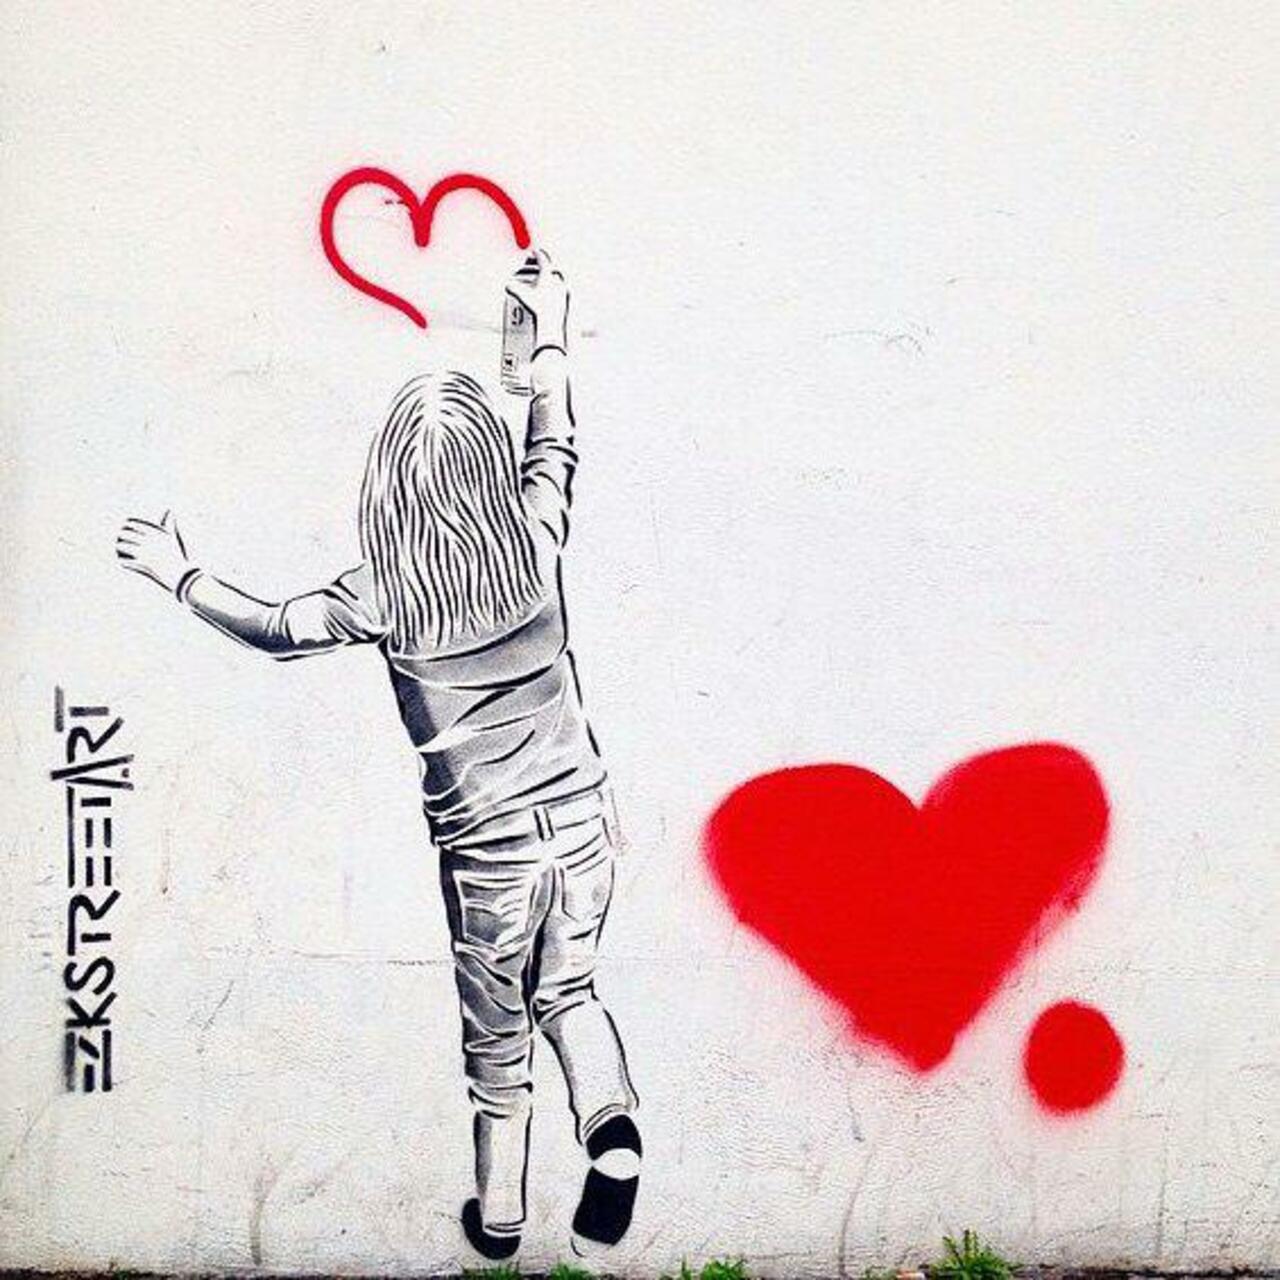 #Paris #graffiti photo by @senyorerre http://ift.tt/1GJjlJ3 #StreetArt http://t.co/54m17ehdeM